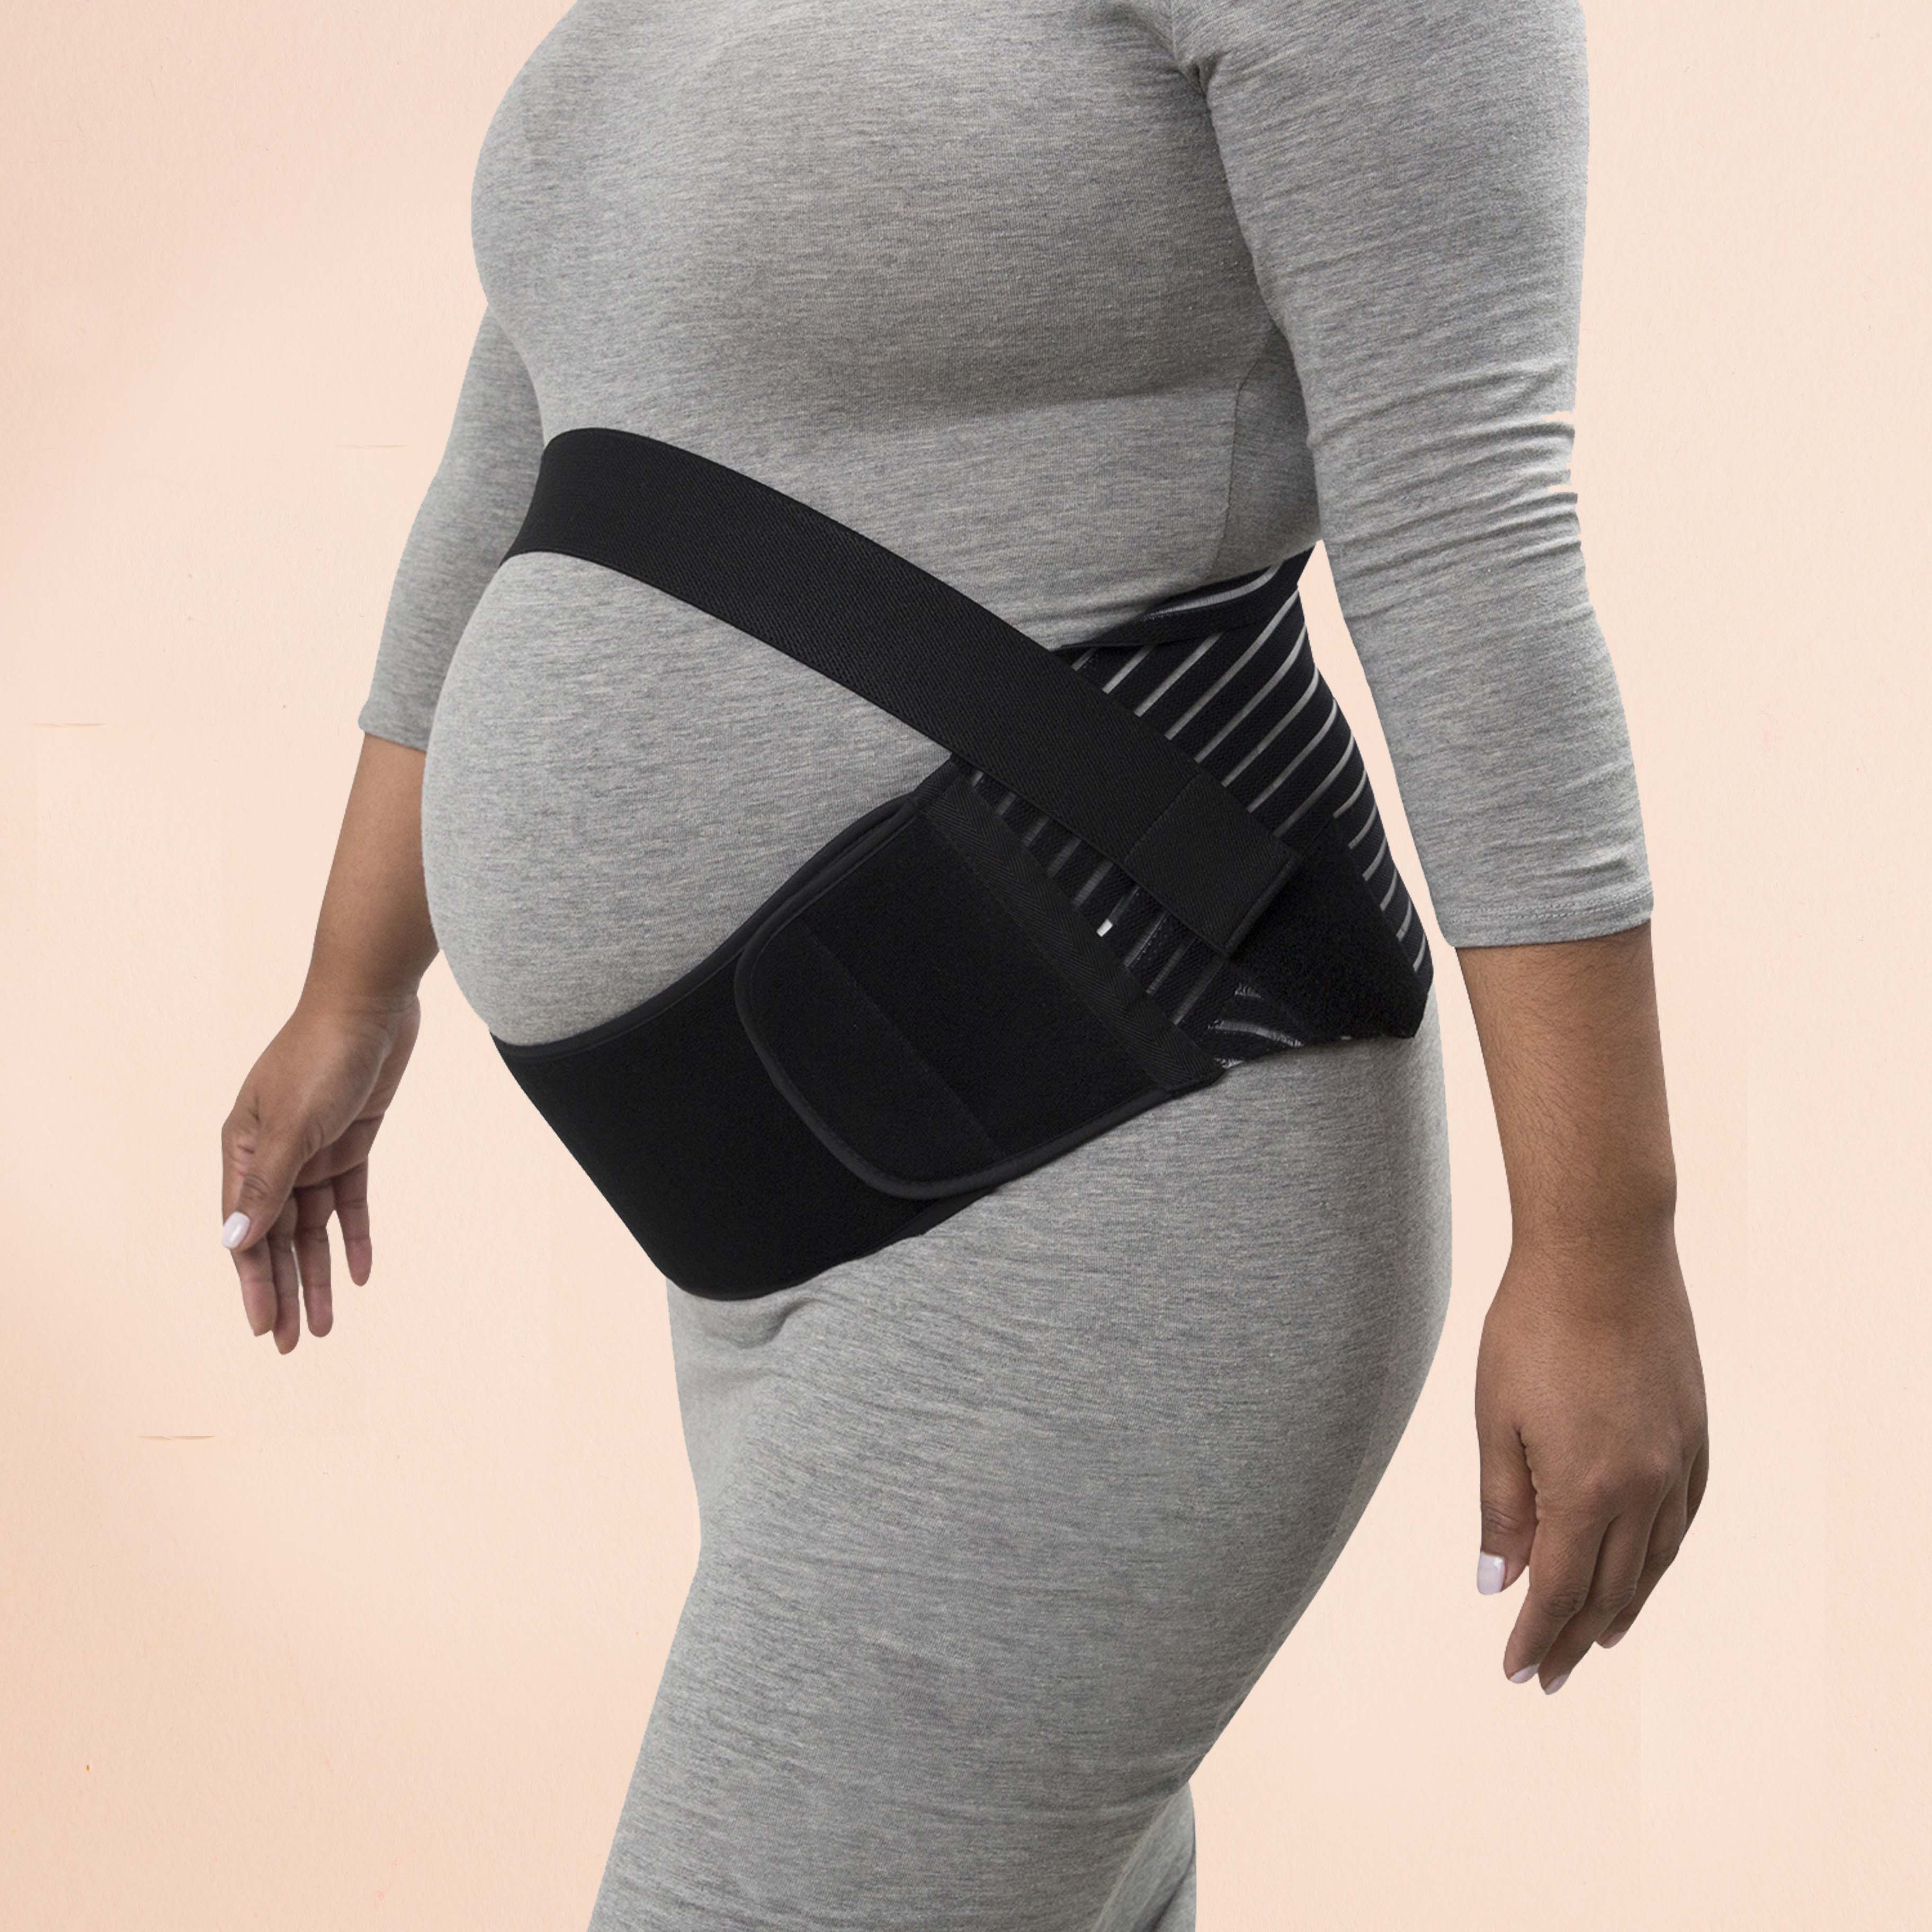 BELLY SUPPORT BELT FOR PREGNANT WOMEN DURING PREGNANCY  Maternity belt, Pregnancy  support belt, Belly support belt